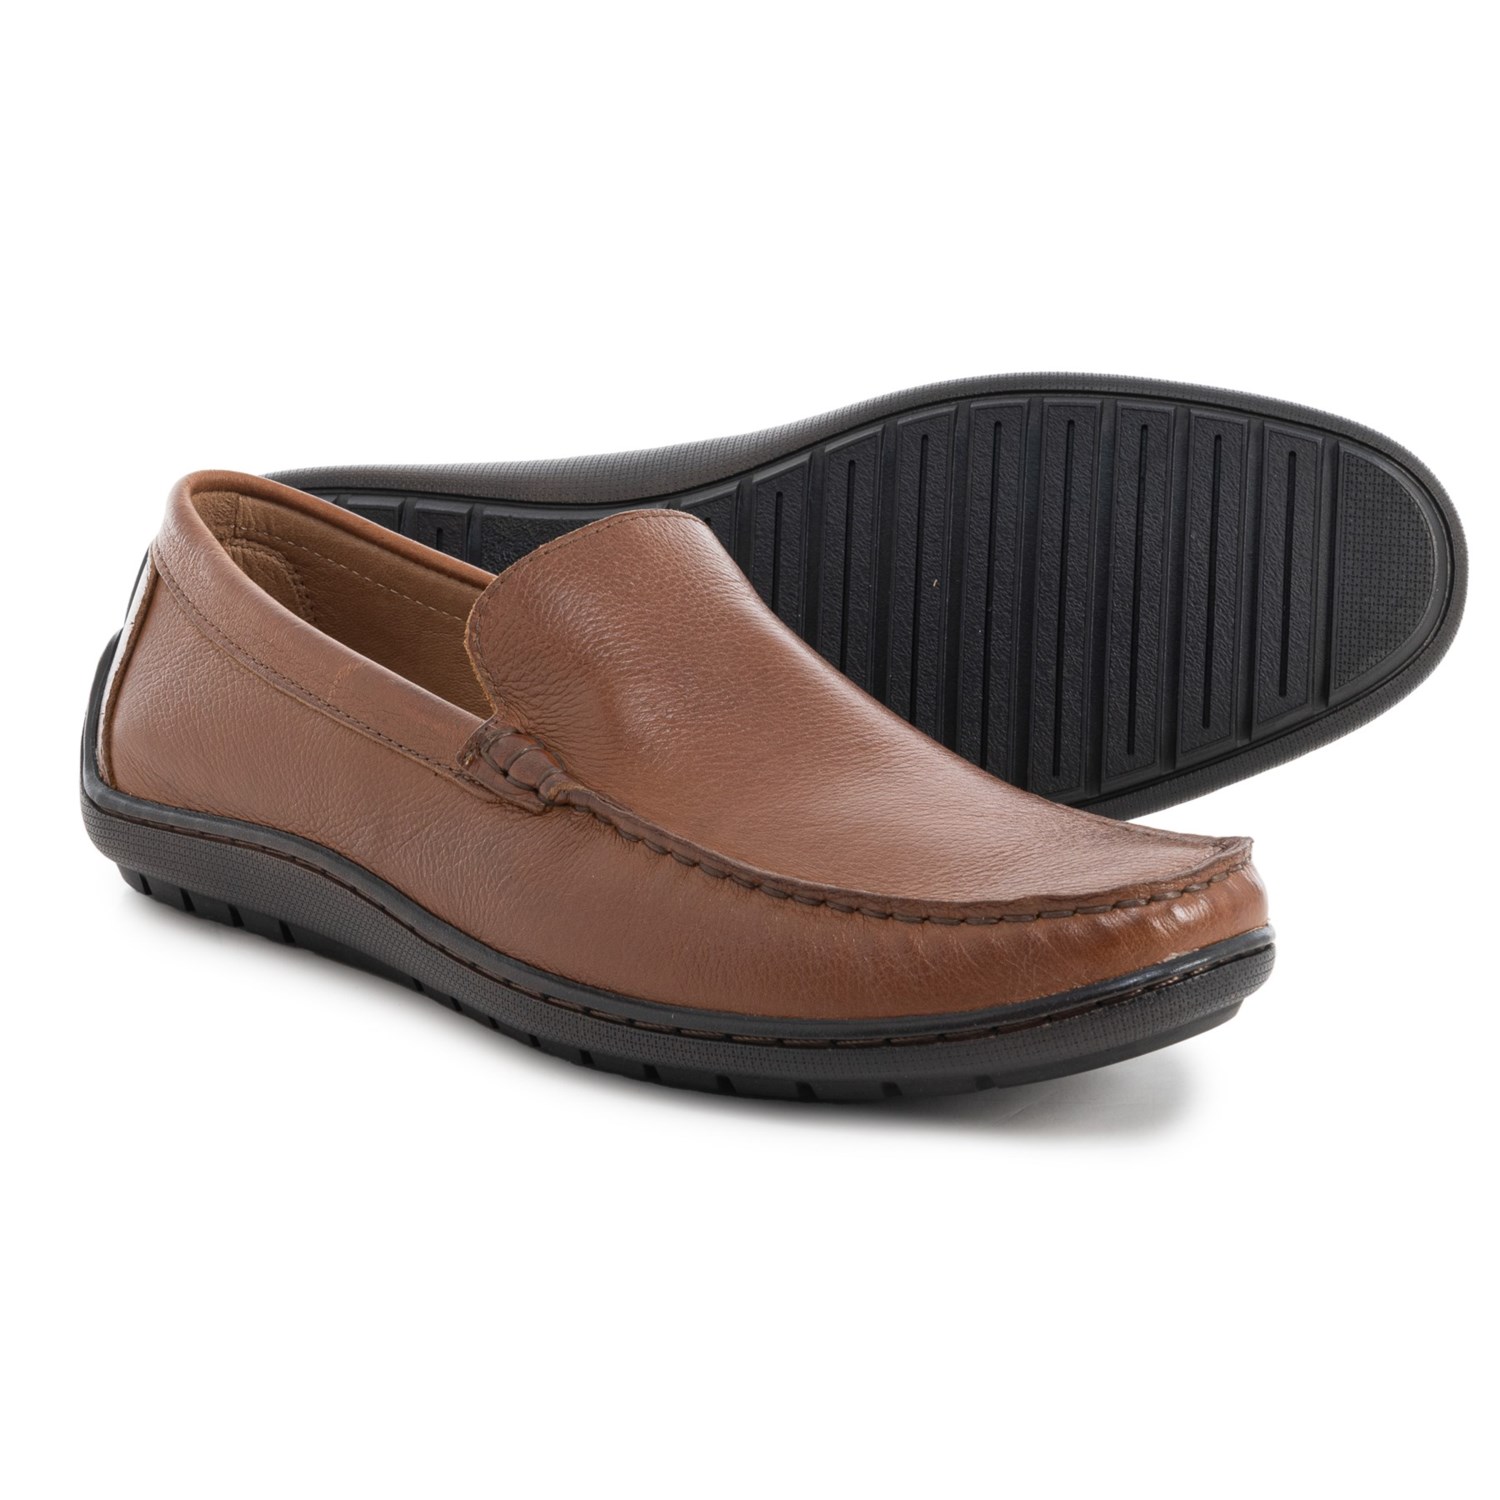 Johnston & Murphy Nichols Oxford Shoes (For Men) - Save 24%